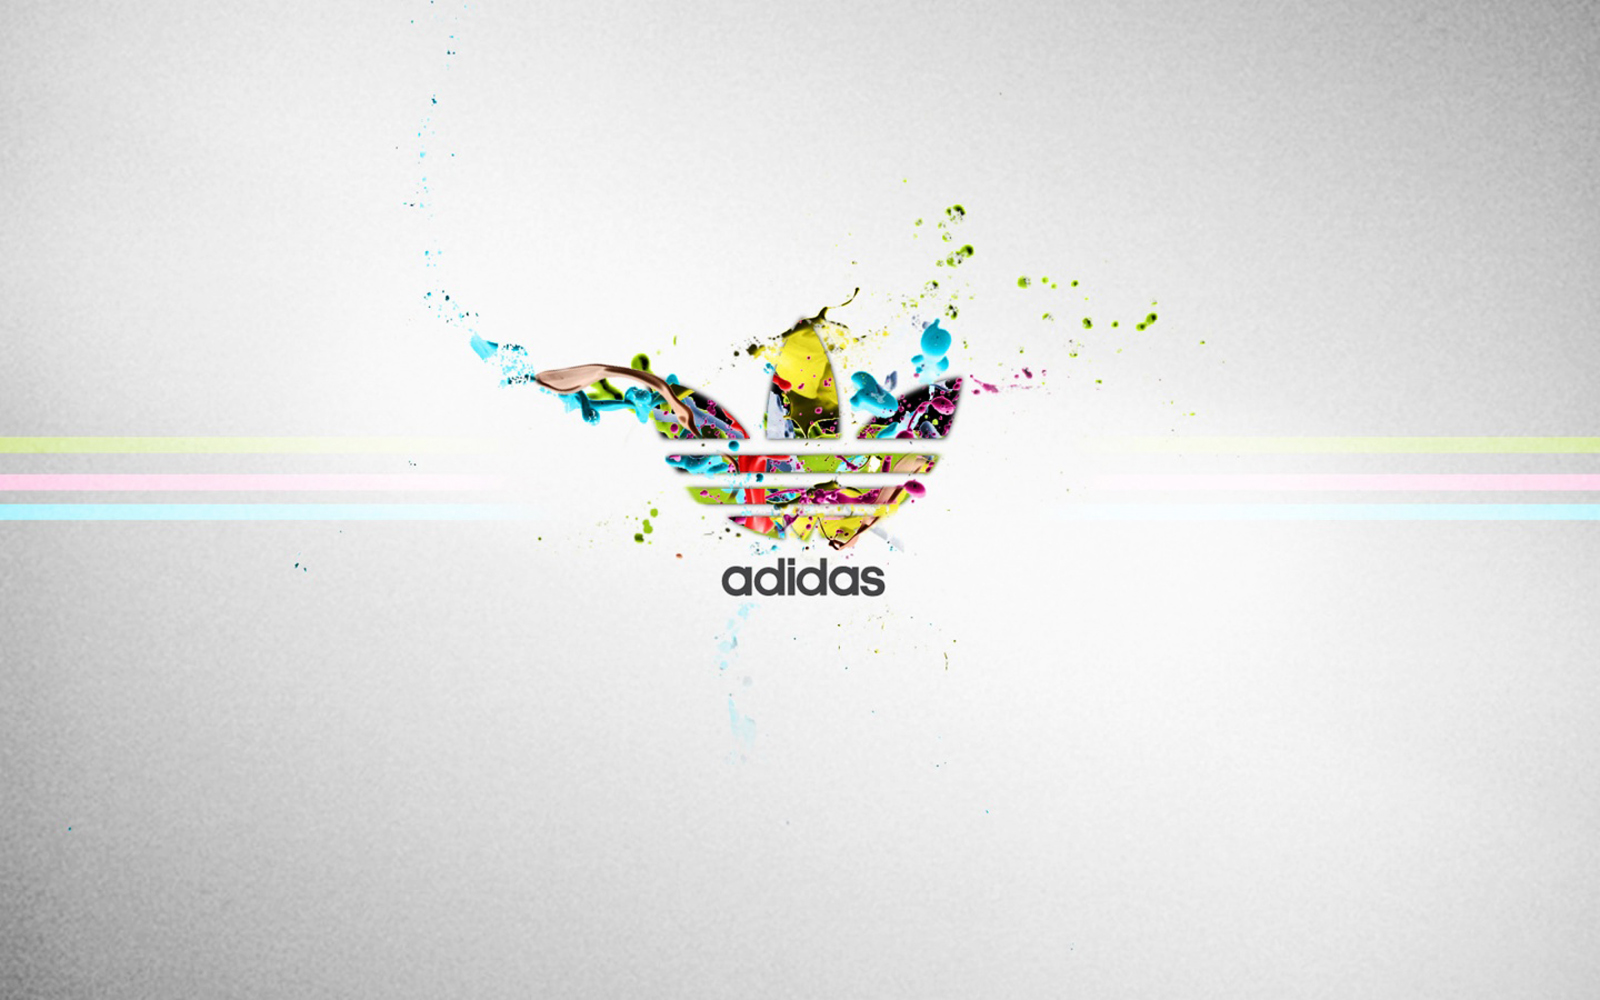 https://blogger.googleusercontent.com/img/b/R29vZ2xl/AVvXsEjFekyT3IOb5J-h3LQRlCTb_A6GN6bc5AwGAQQrqpC26vXqRhjAVKYv99rzIWJ377Tc6k3MRwDrAgjBL7SSYMUPktFjeZ6u1FO4kExFhGNYX6hanCwyLoE3nMNITduFKwJmtXy8jtKb5SU/s1600/Adidas_Logo_Colorful_Paints_HD_Wallpaper-Vvallpaper.Net.jpg